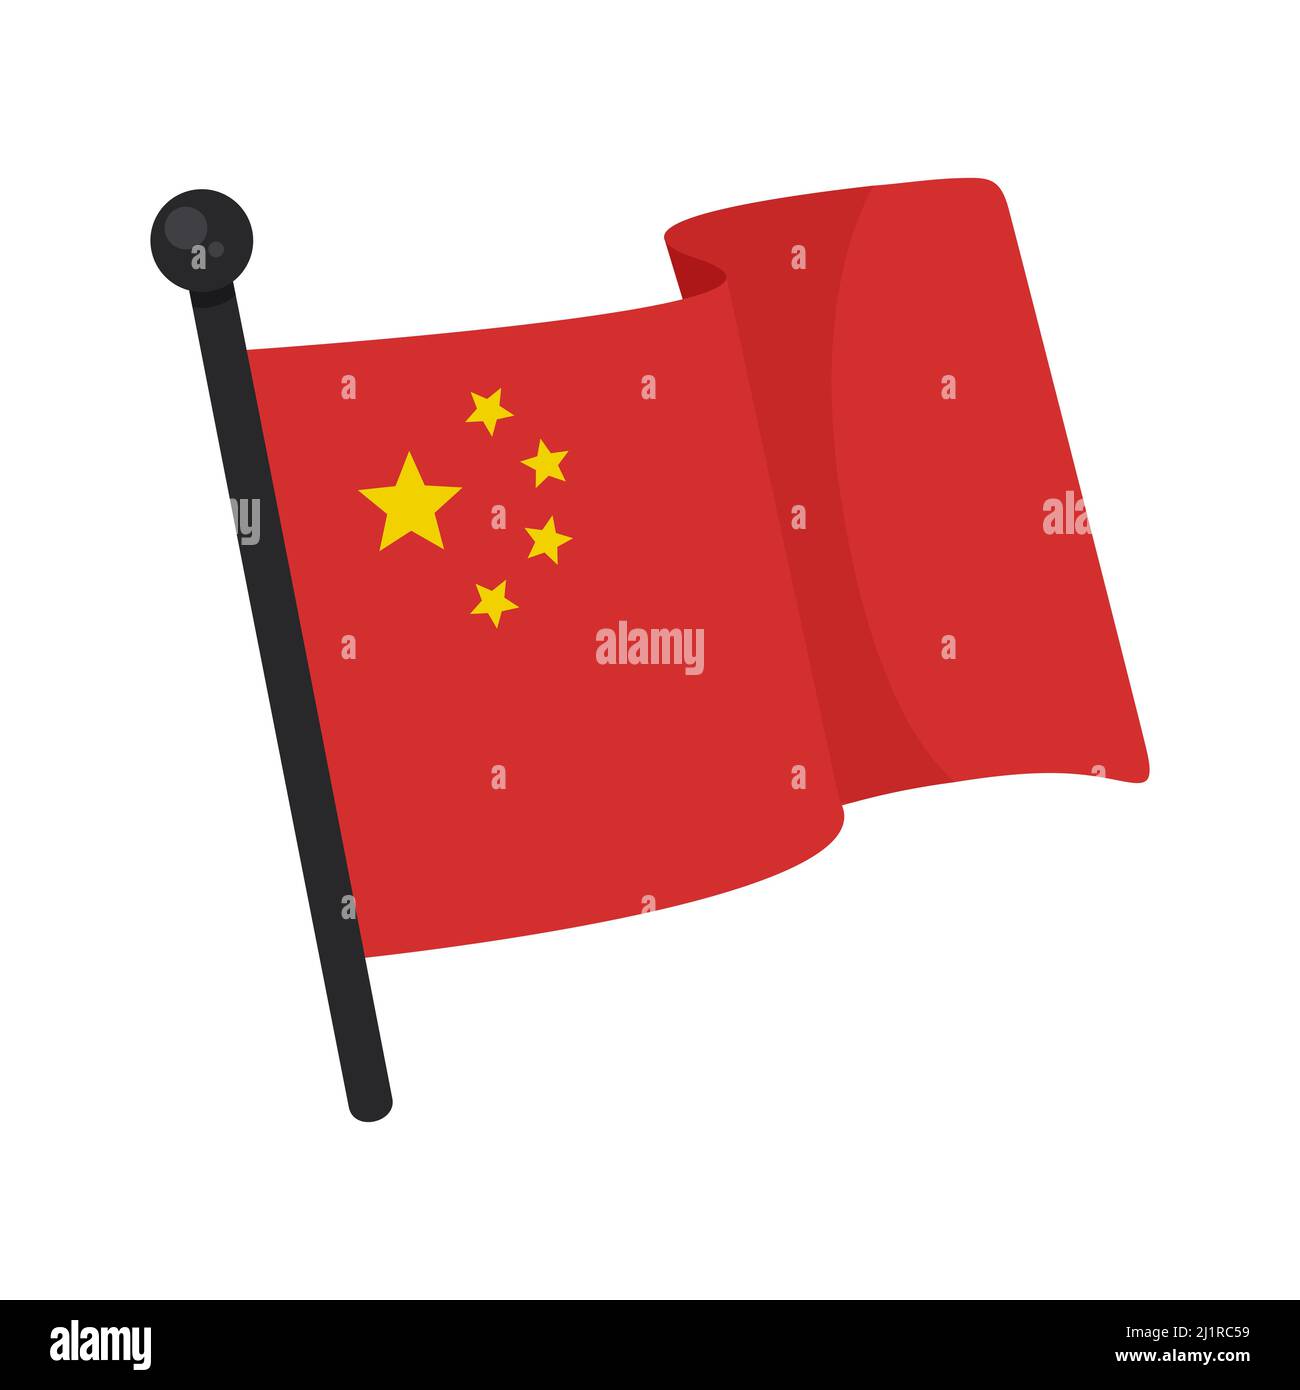 cartoon style illustration of a China flag Stock Vector